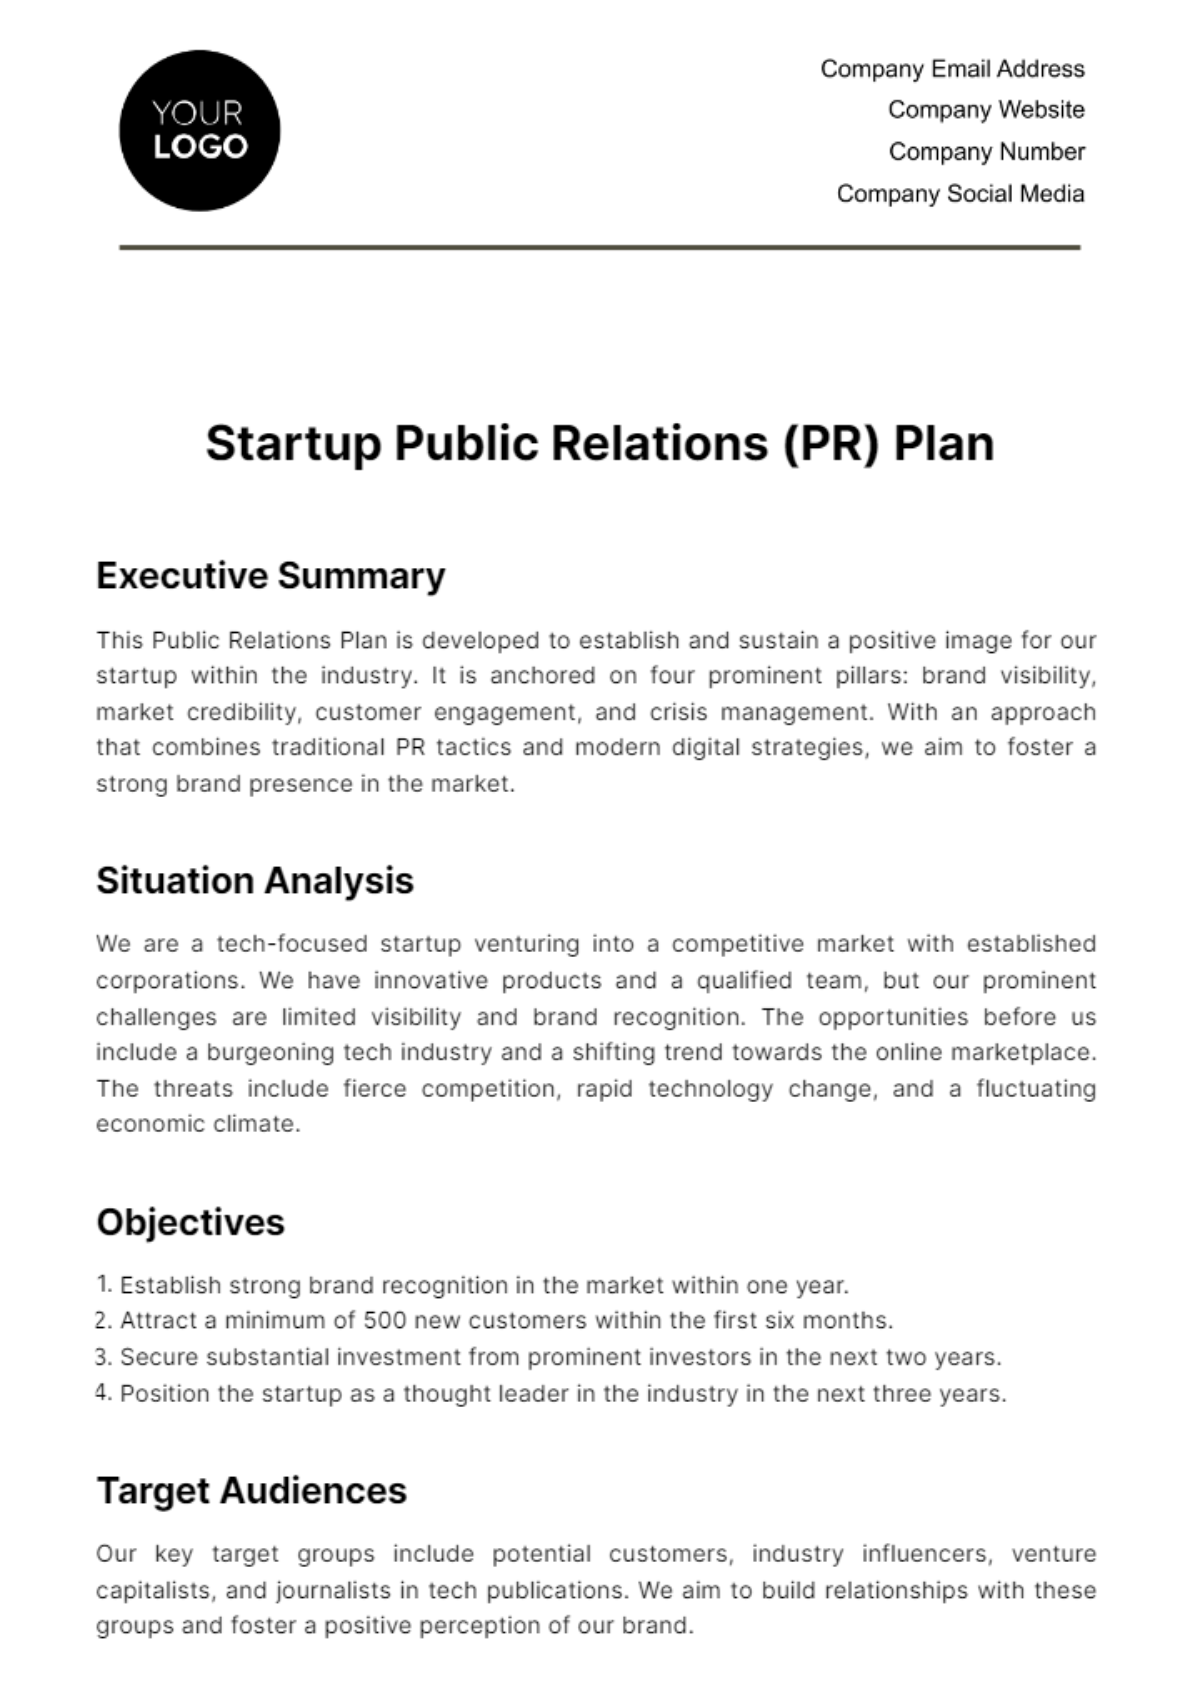 Free Startup Public Relations (PR) Plan Template